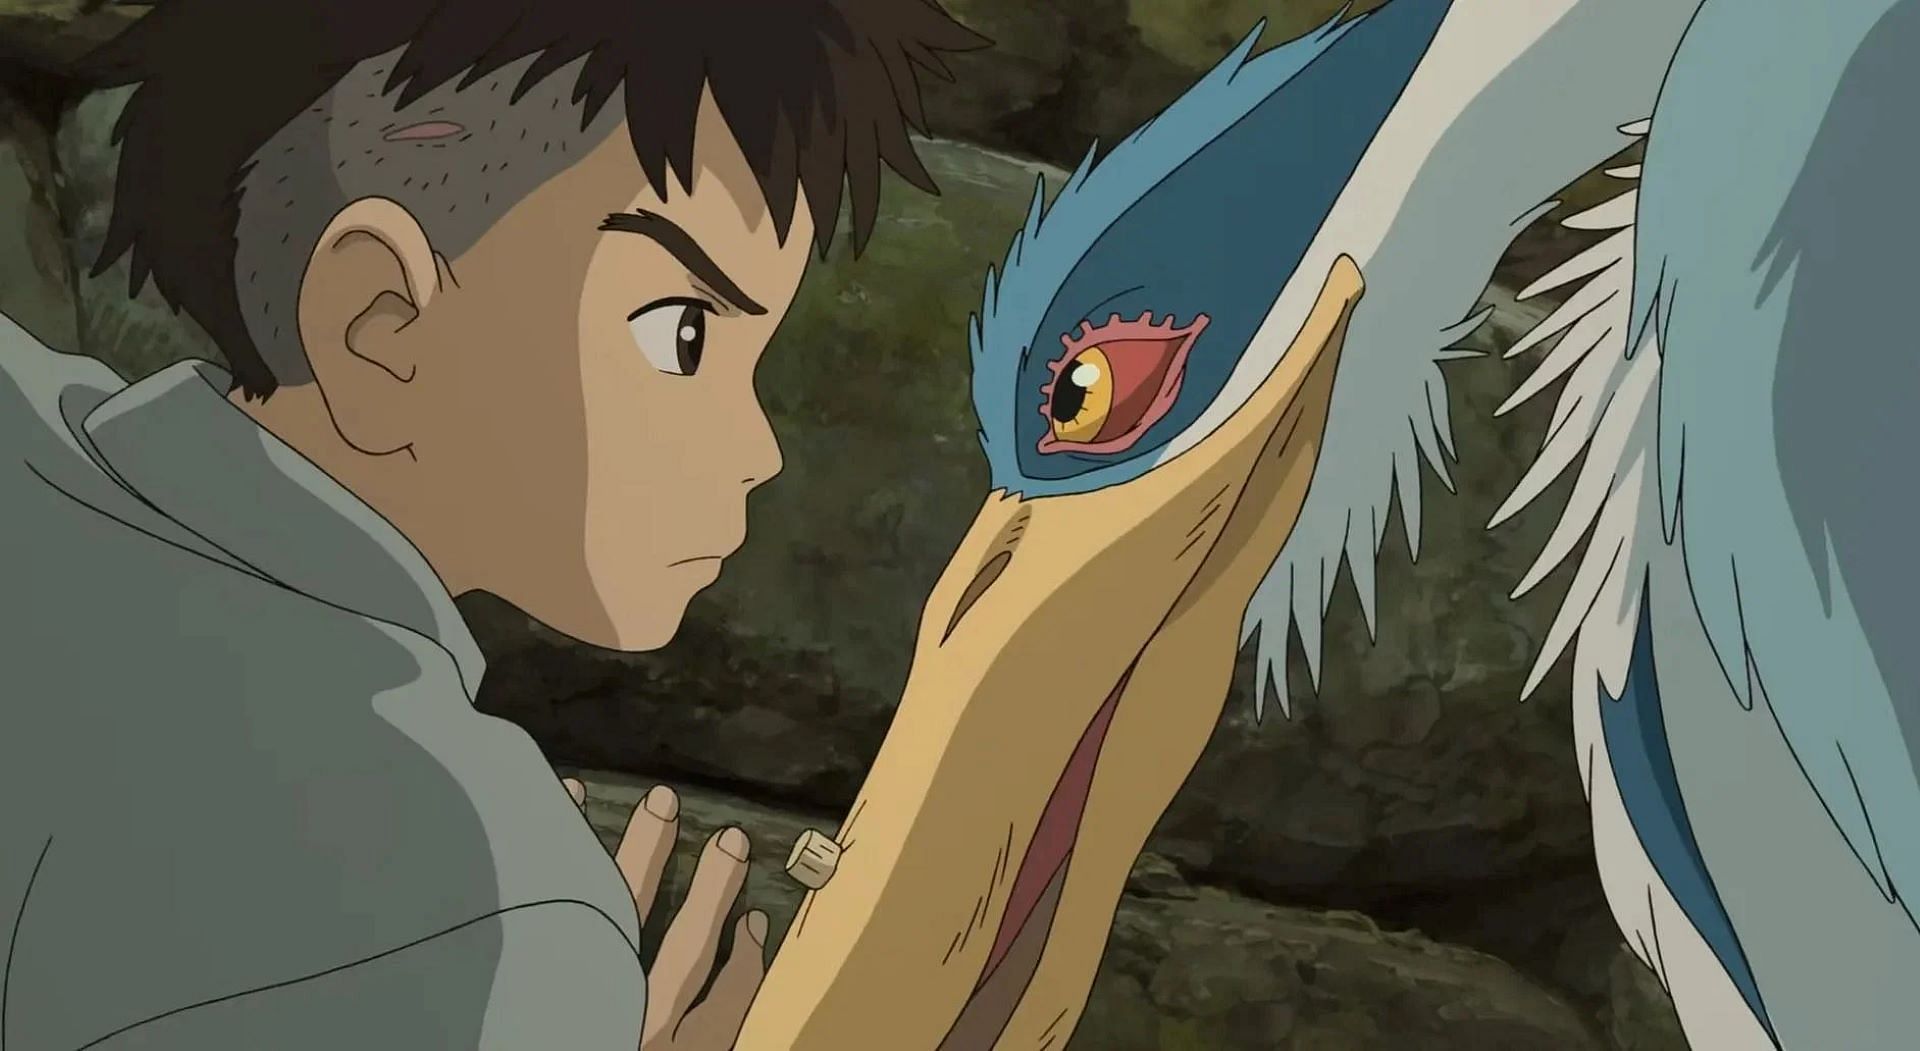 The Boy and the Heron wins BAFTA Award for Best Animated Film (Image via Studio Ghibli)